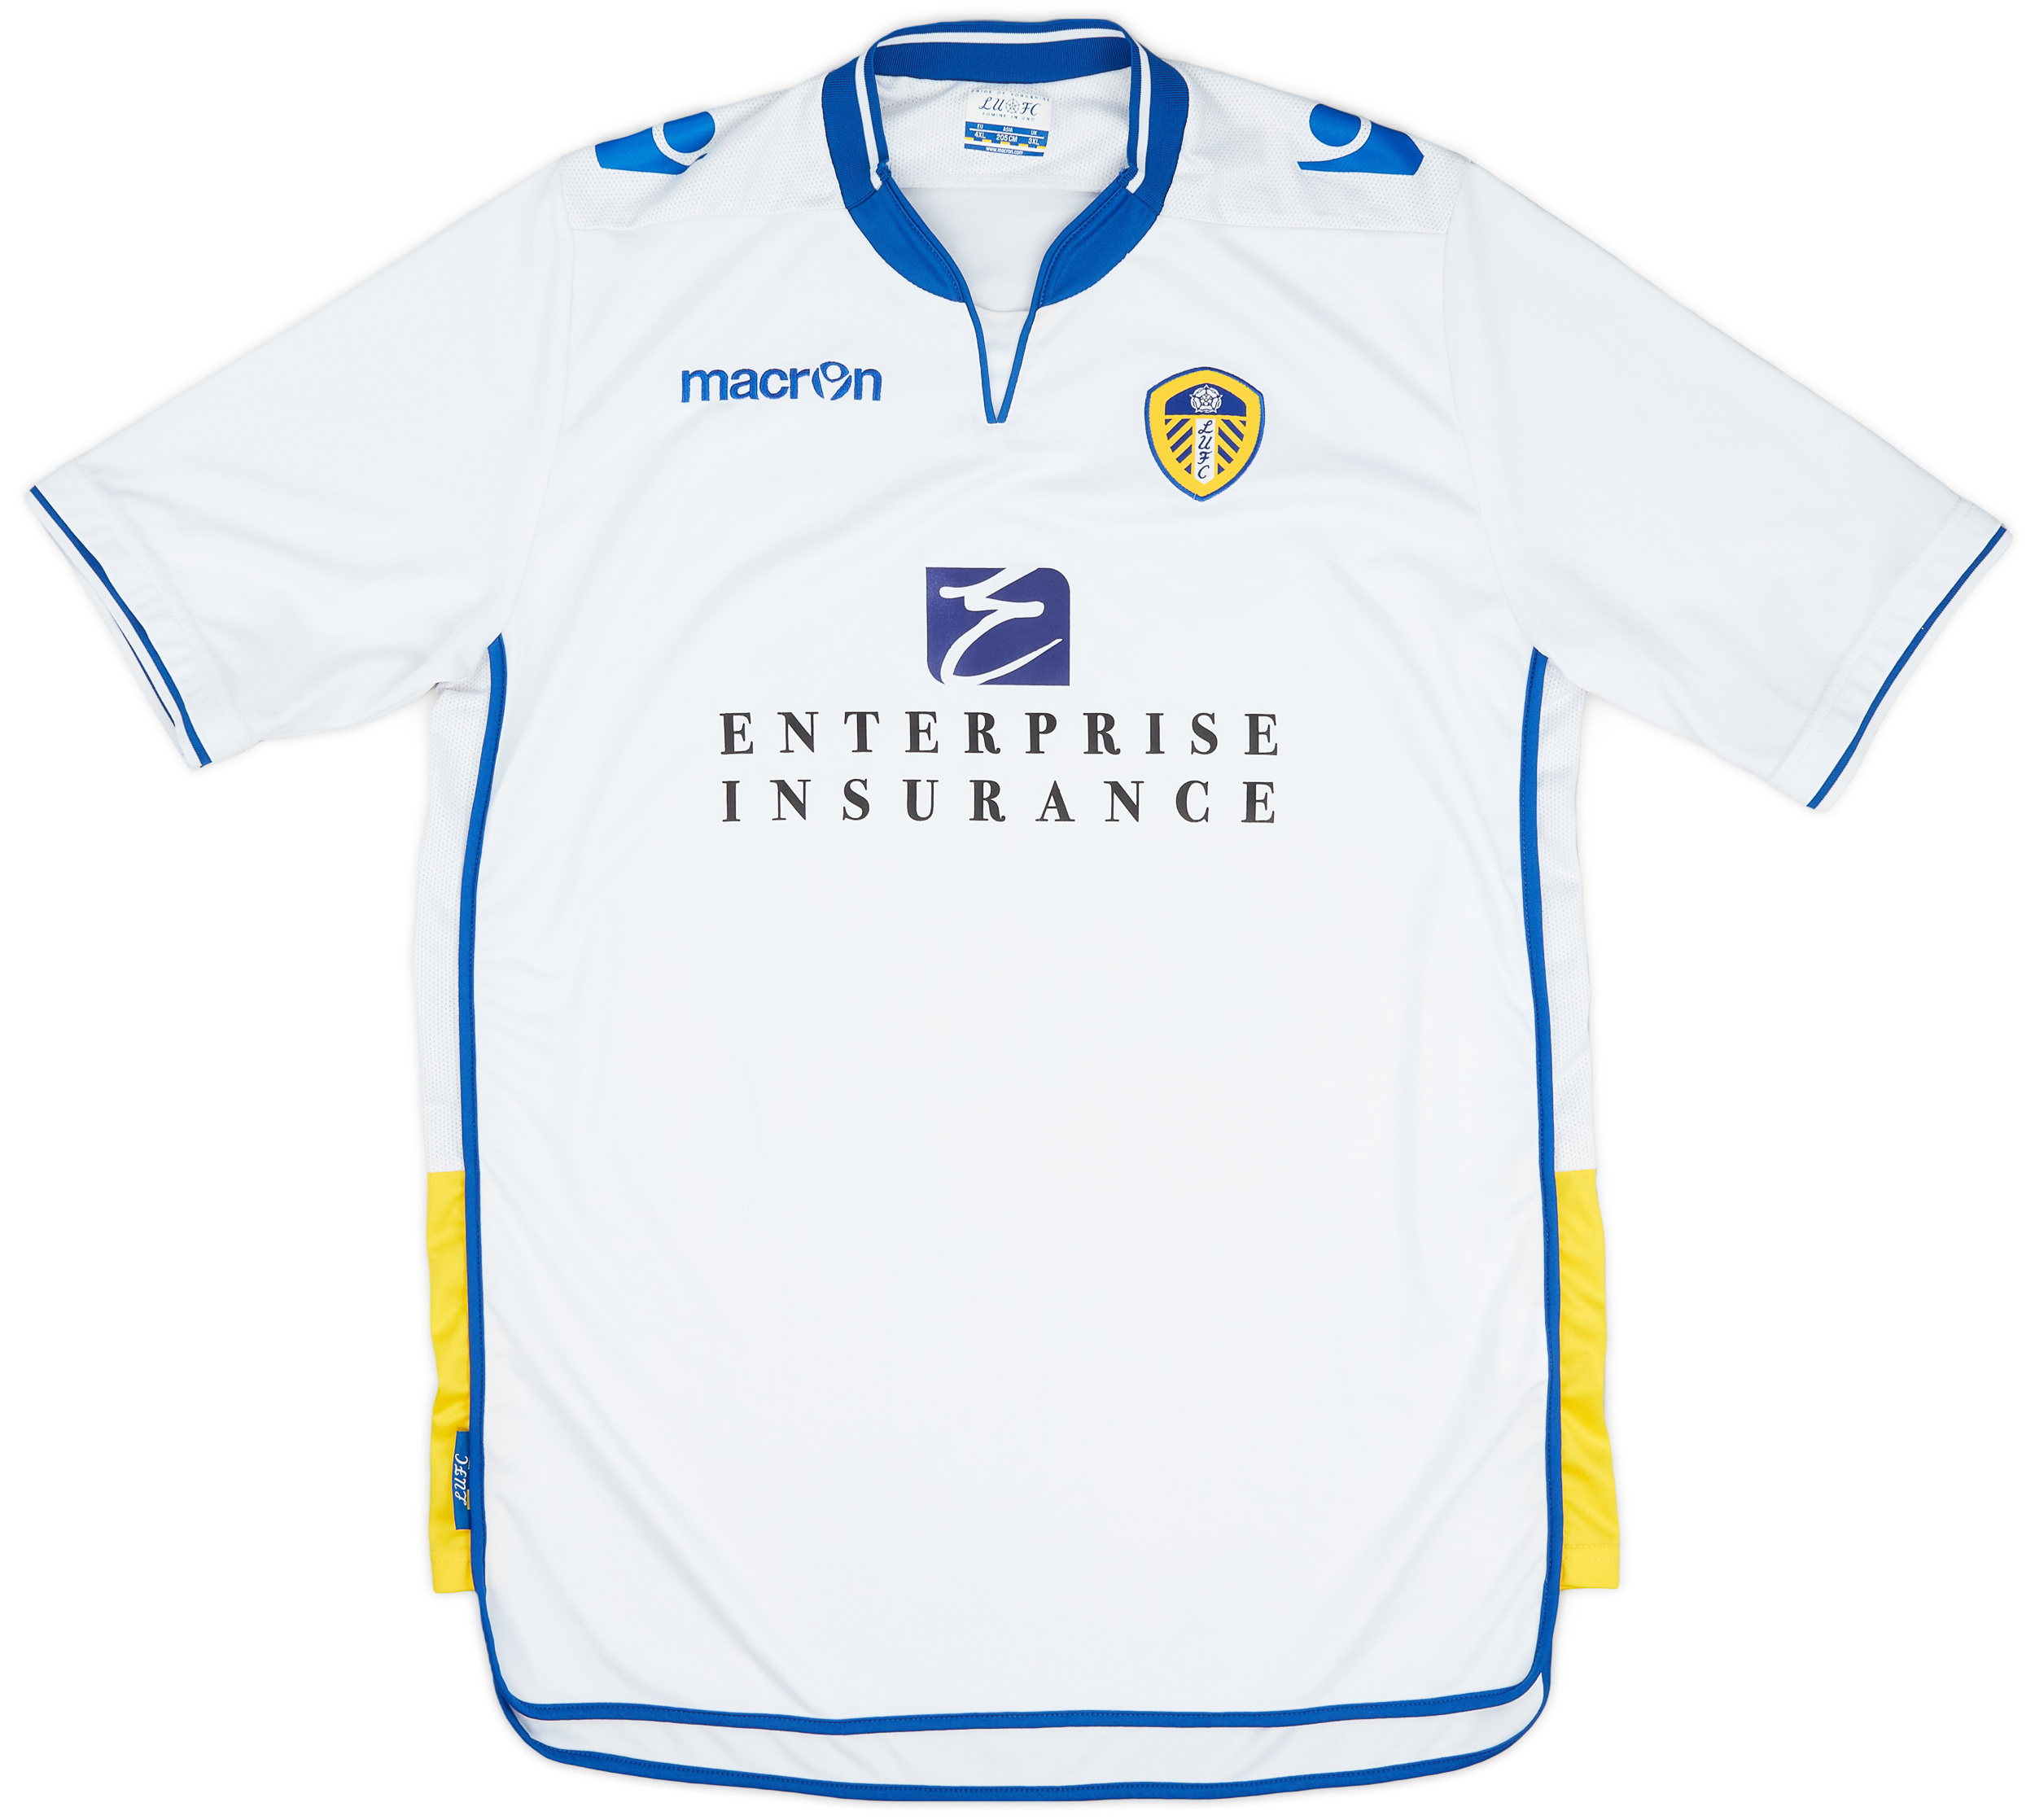 2012-13 Leeds United Home Shirt - 9/10 - ()